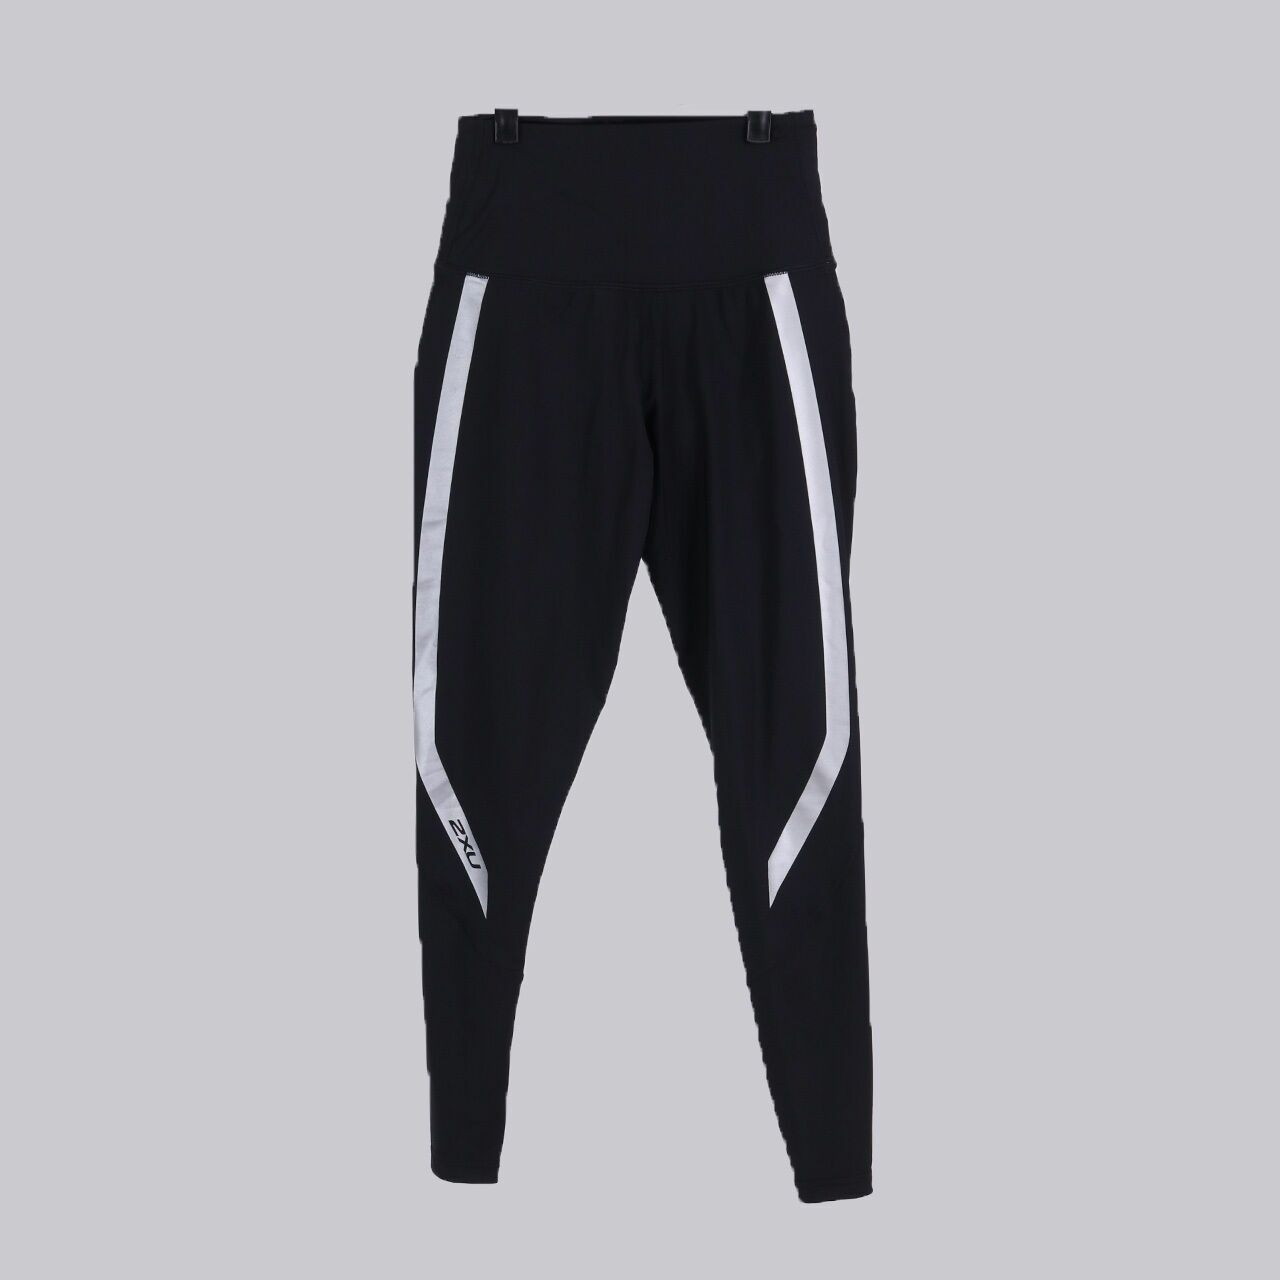 2XU Black Legging Sport Pants